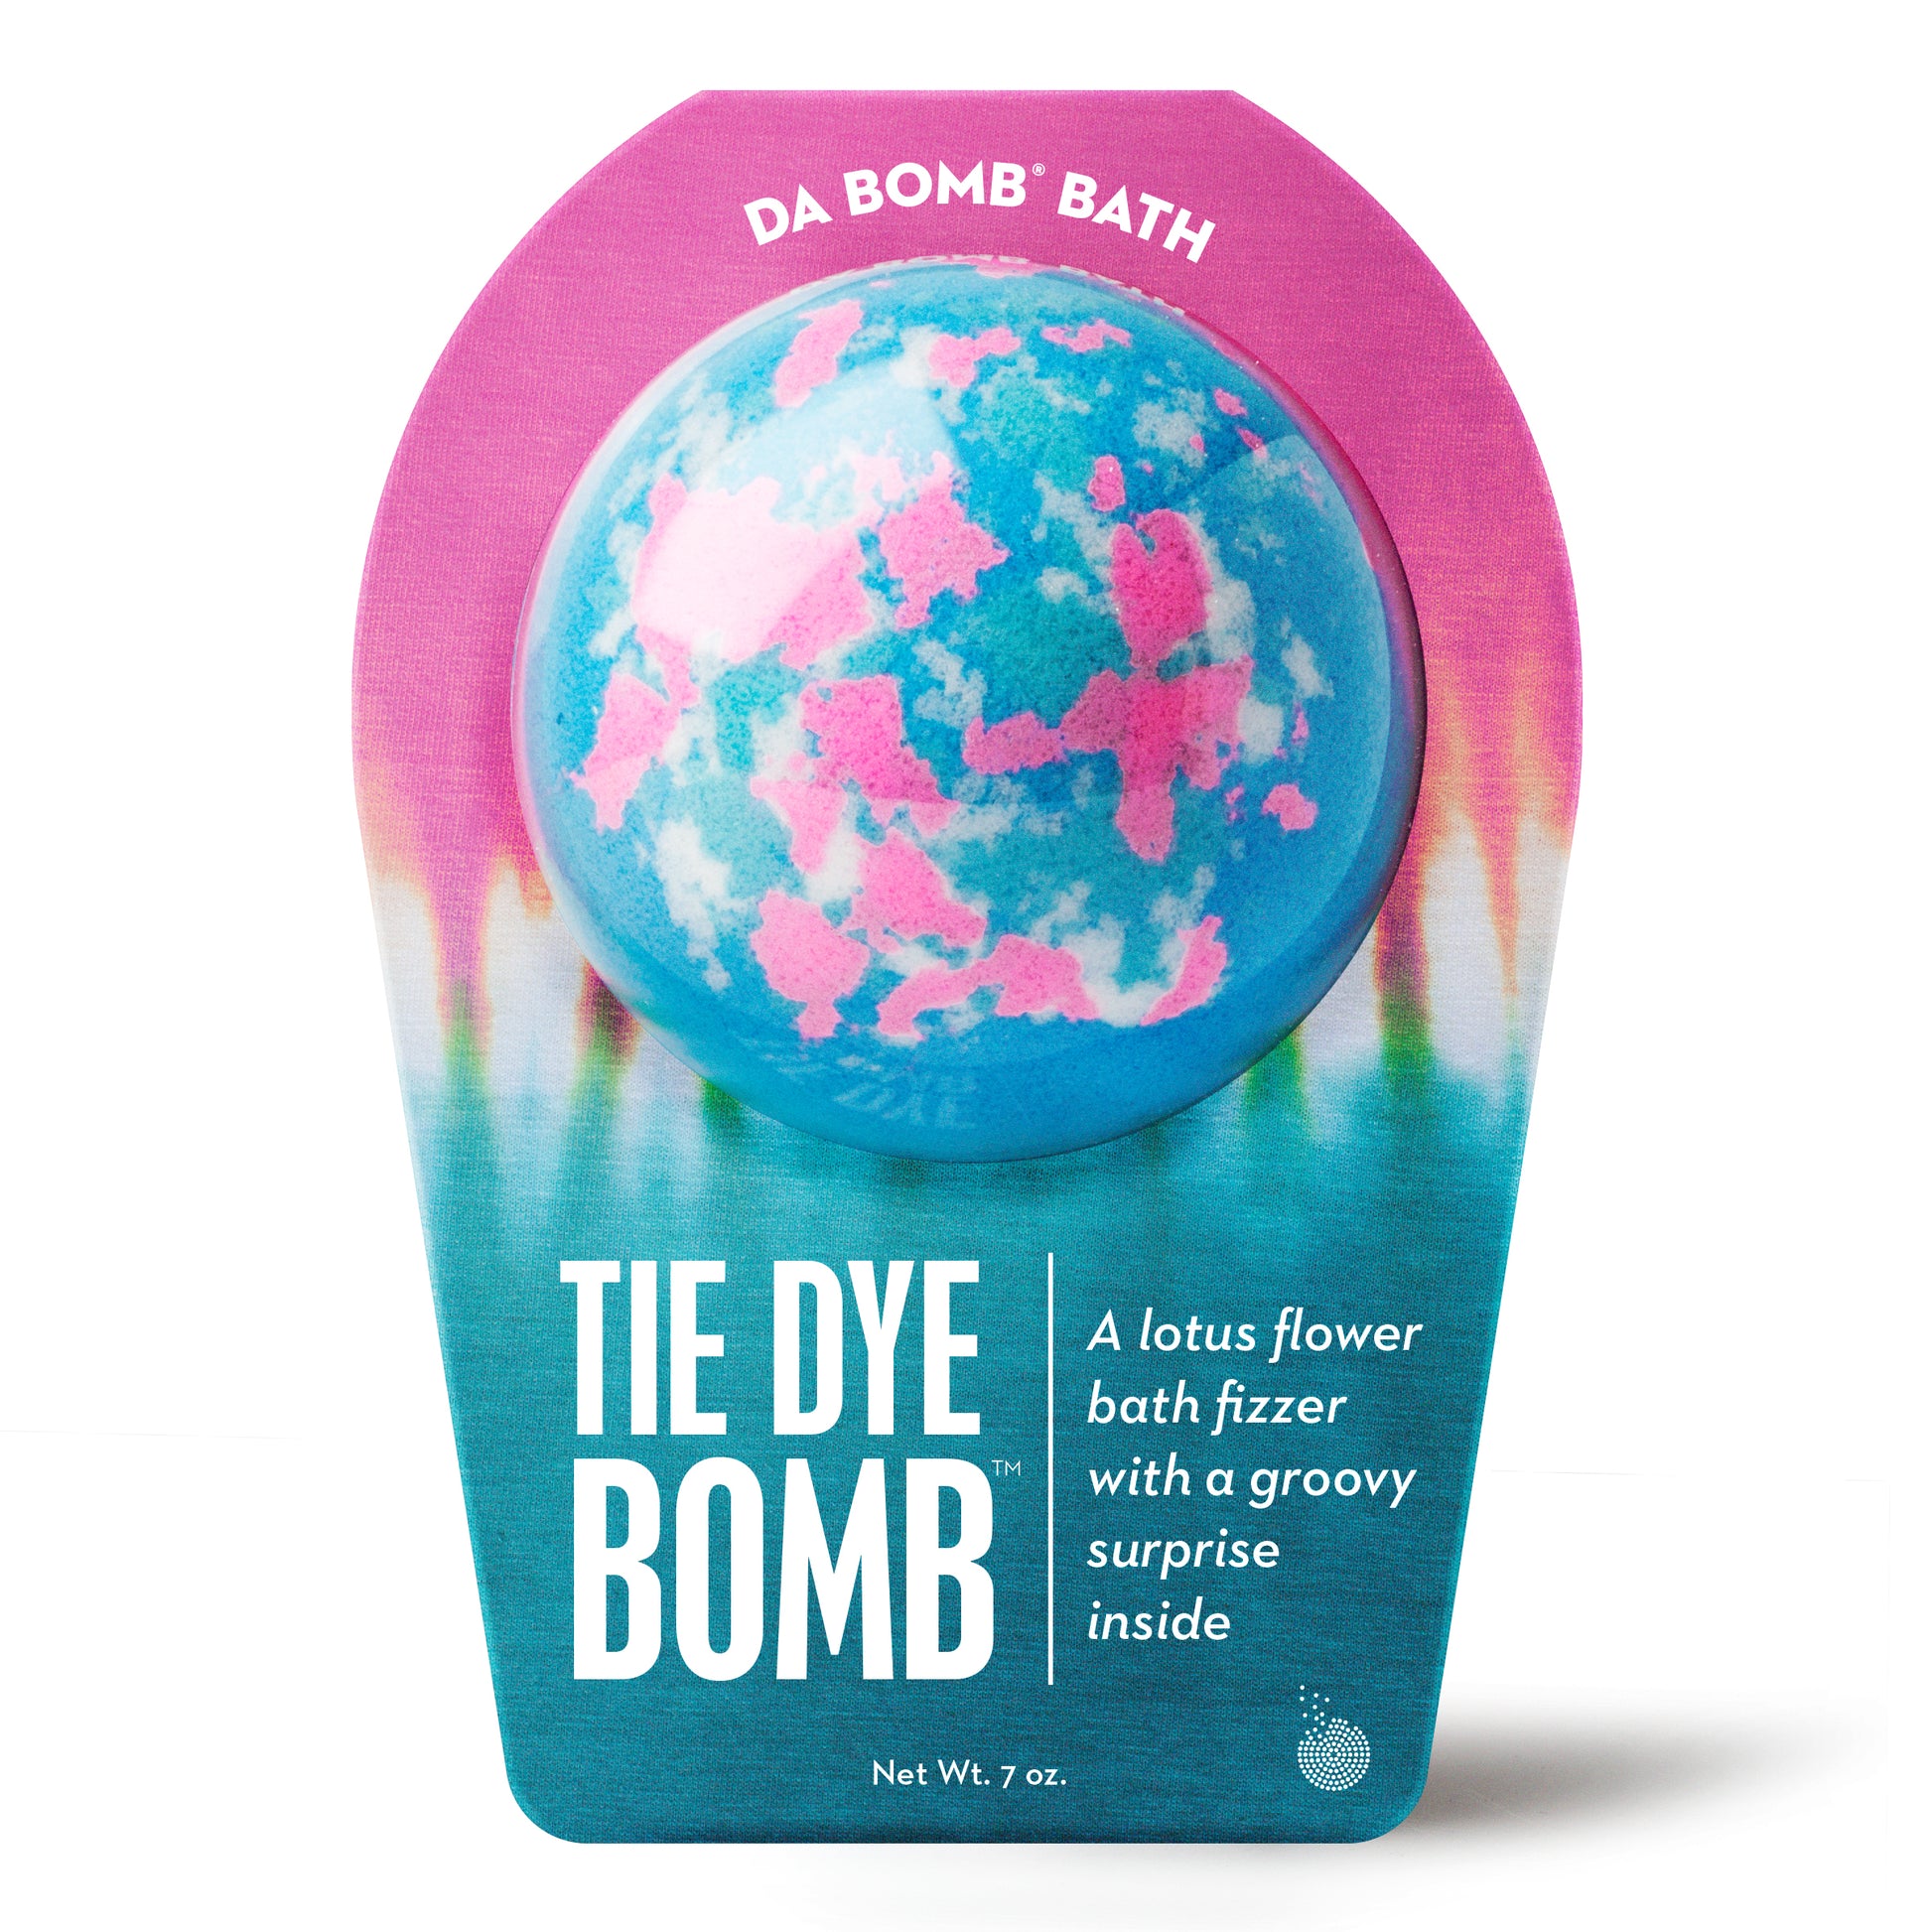 a blue bath bomb with pink spots in tie dye packaging